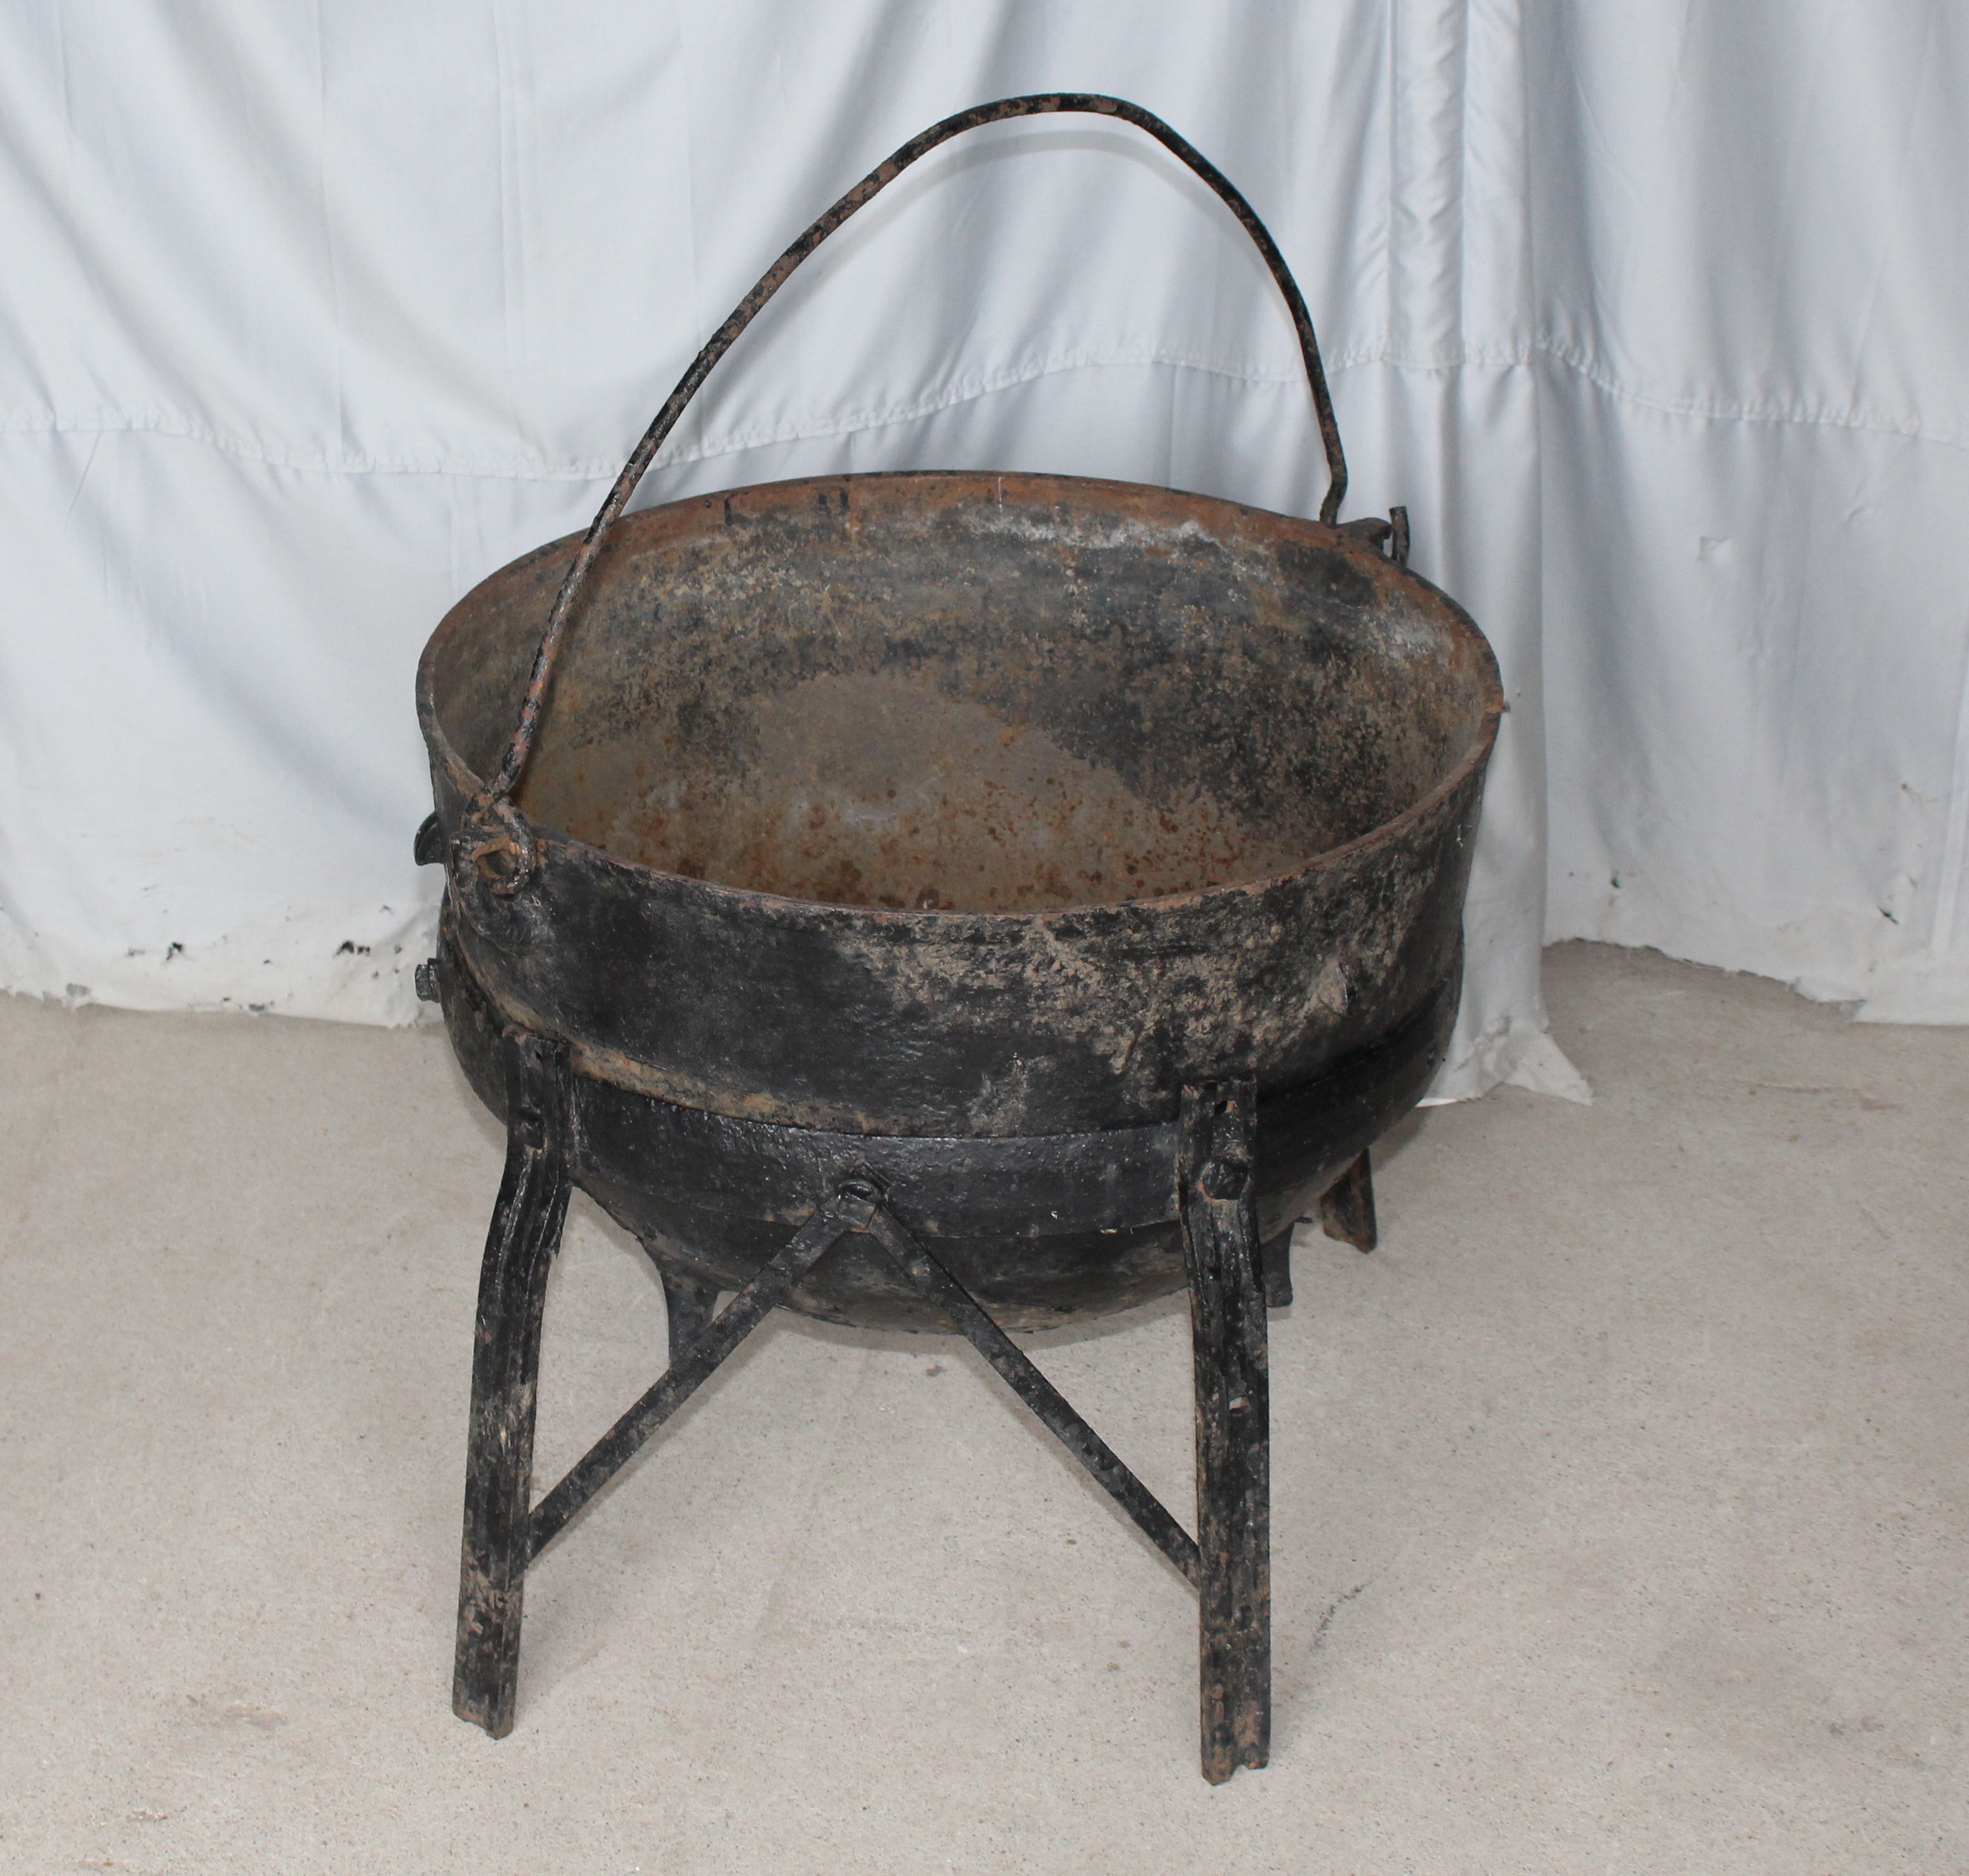 Large cast iron scalding pot, 27 diameter, crack